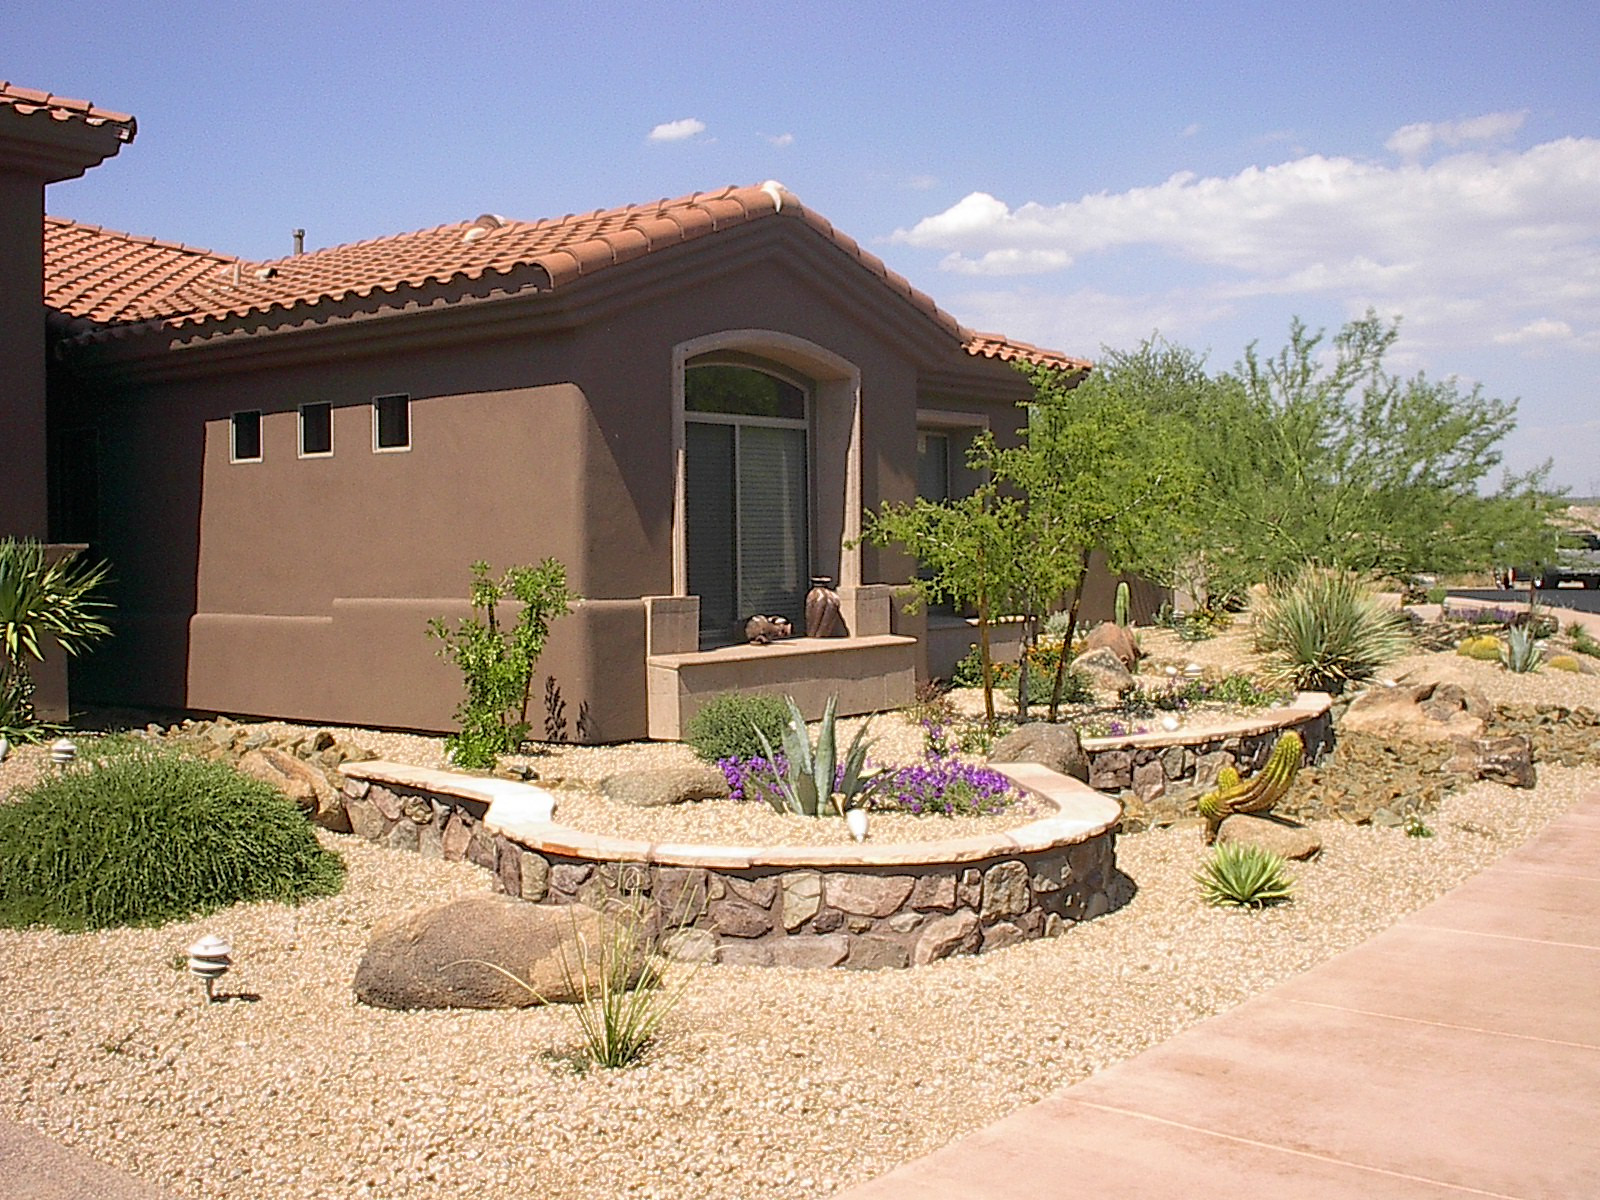 Desert Landscape Backyard
 Desert Landscaping Ideas to Make Your Backyard Look